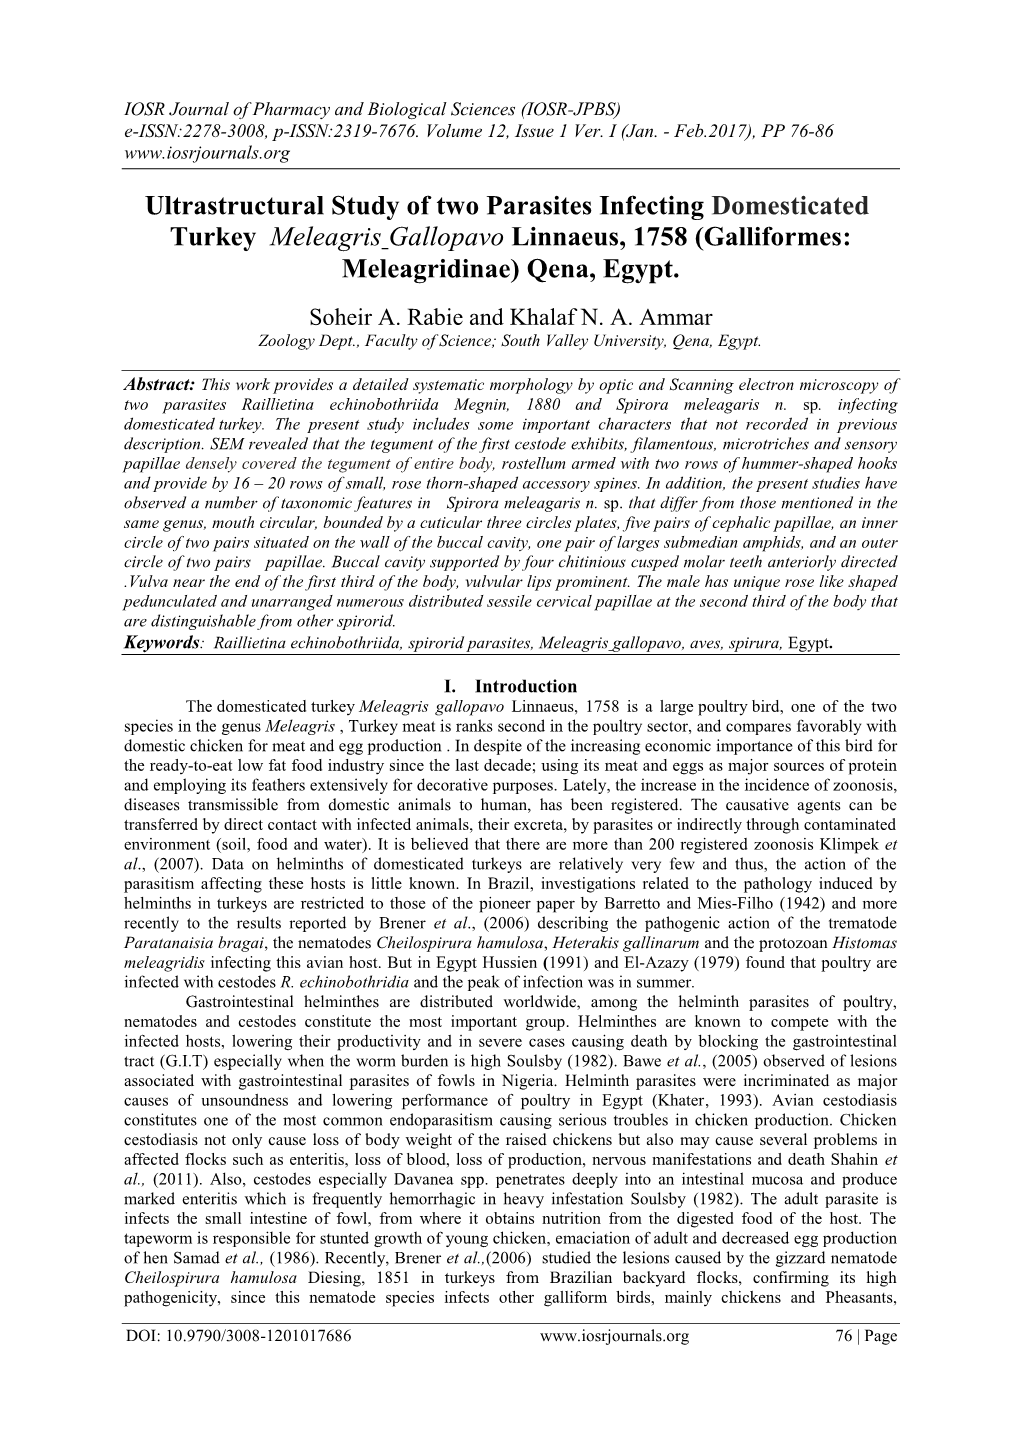 Ultrastructural Study of Two Parasites Infecting Domesticated Turkey Meleagris Gallopavo Linnaeus, 1758 (Galliformes: Meleagridinae) Qena, Egypt